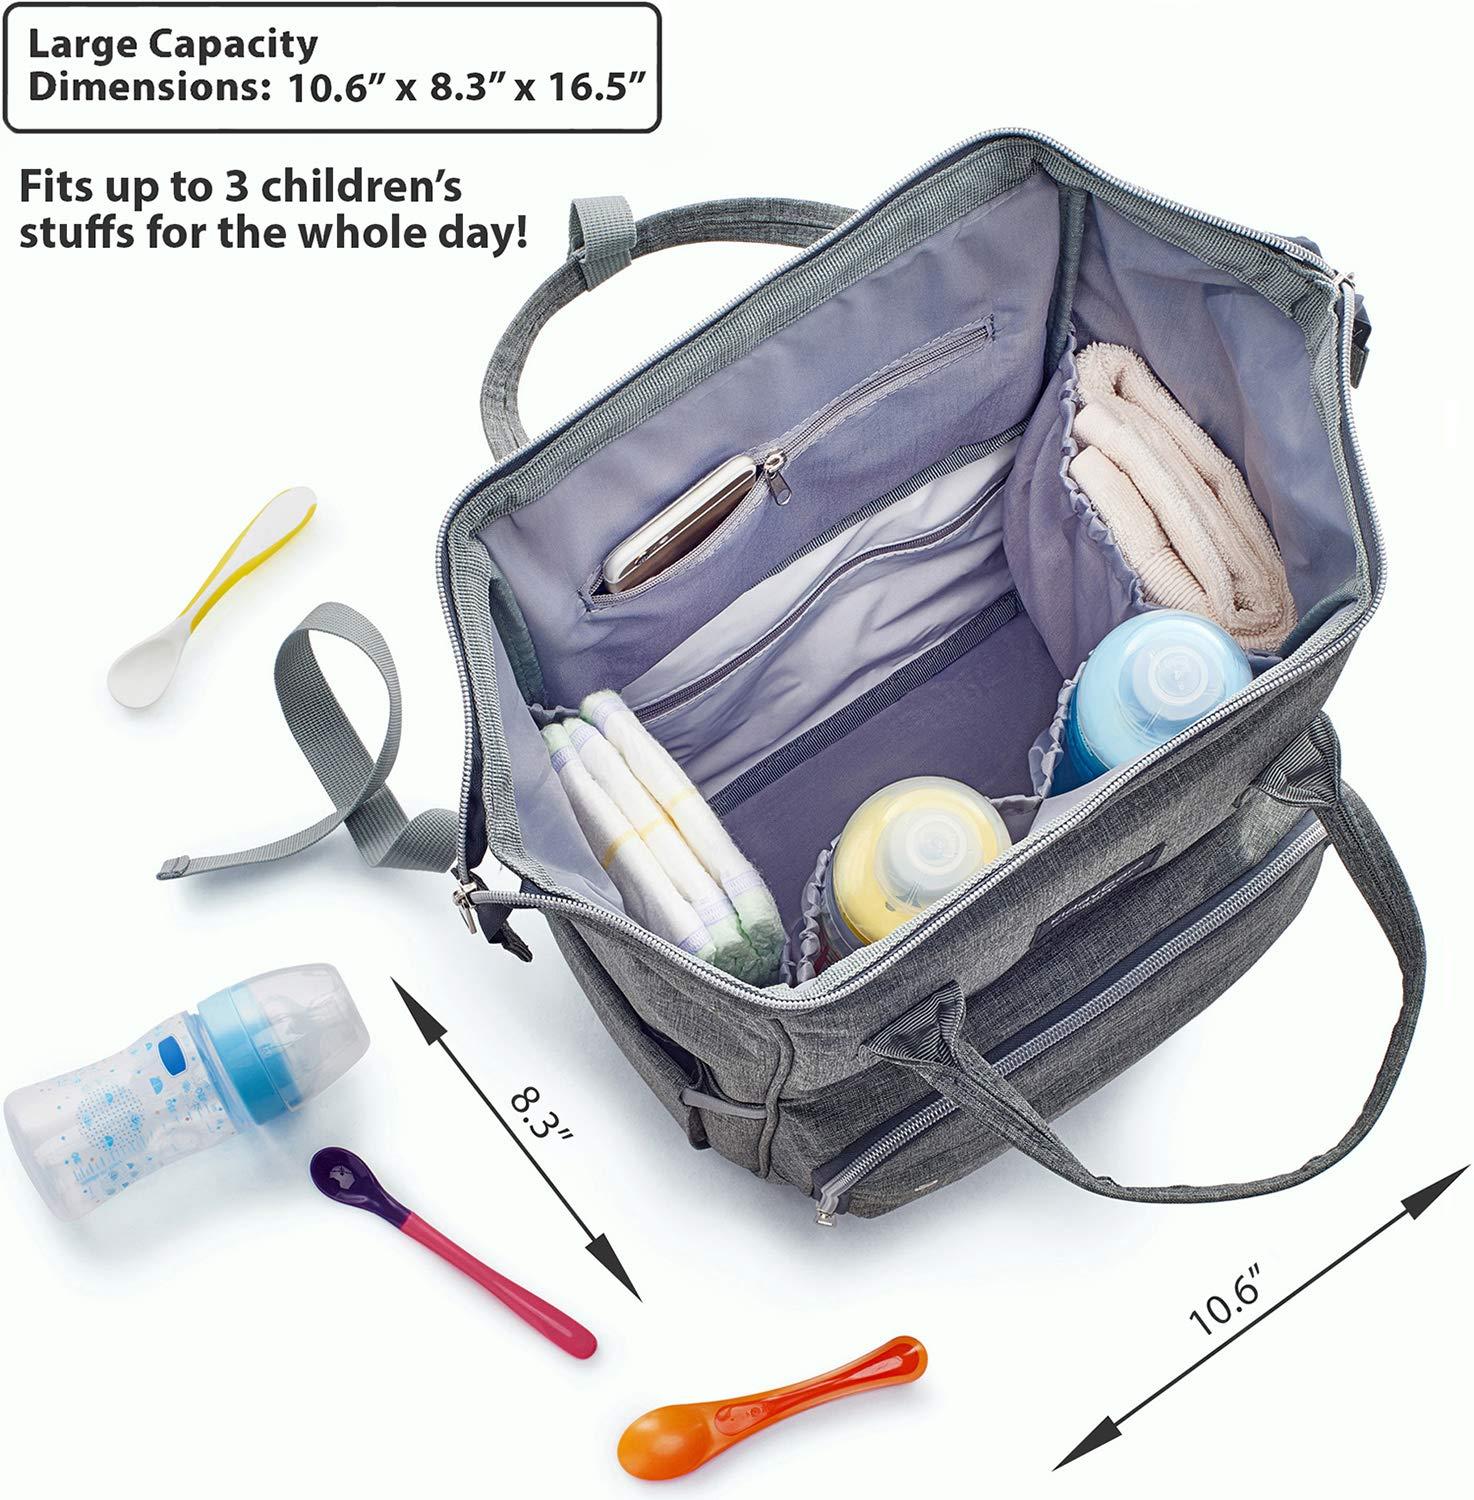 Diaper Bag Backpack · Tan by Capra Leather